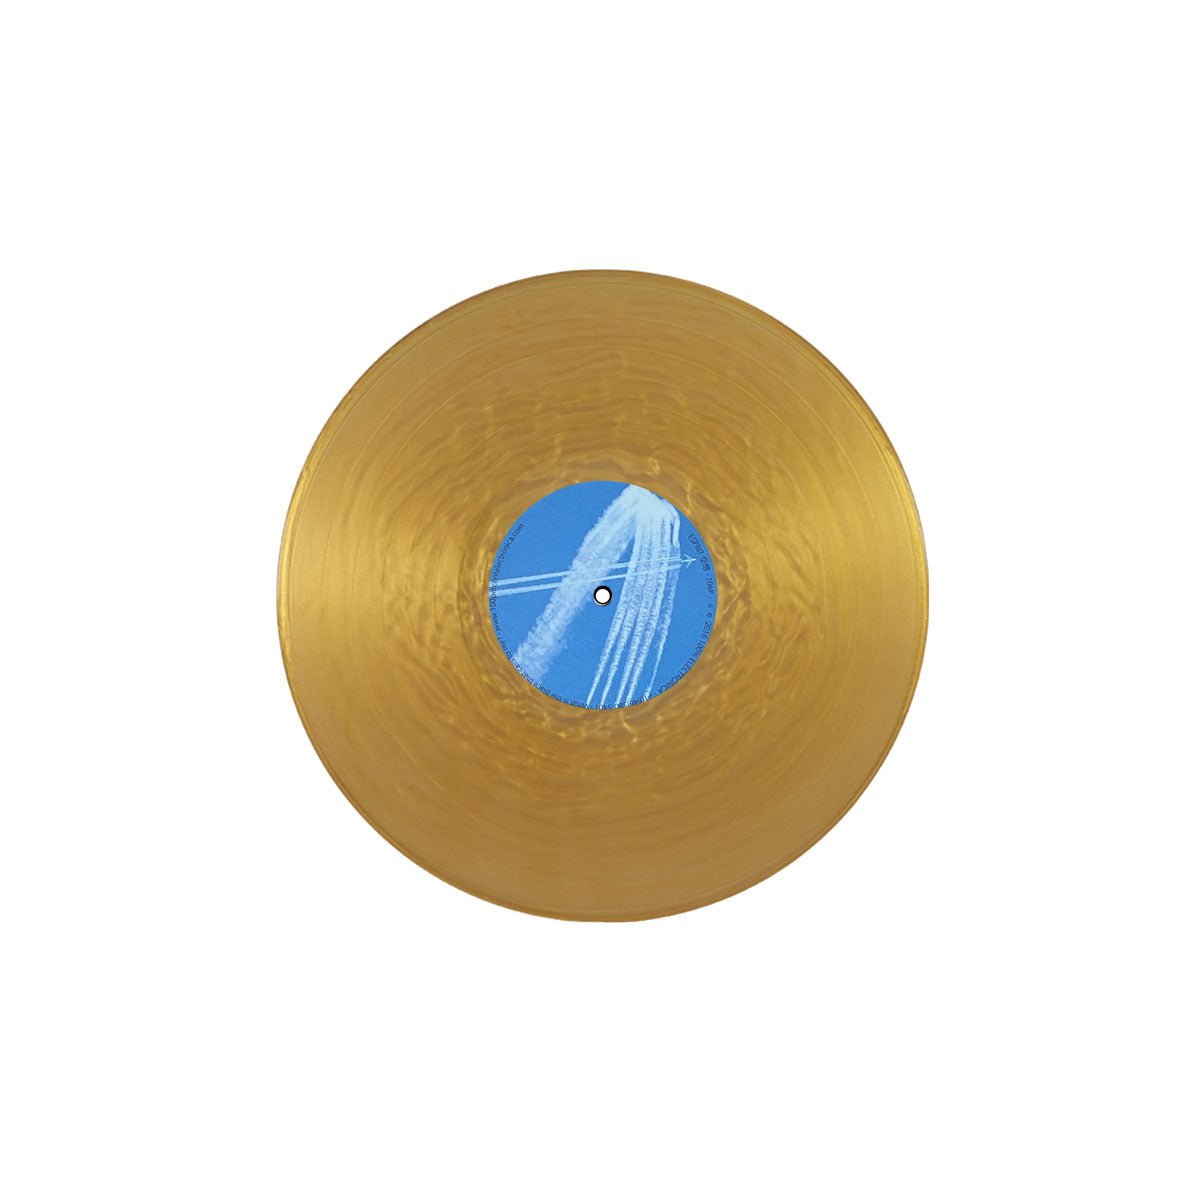 George Clanton Fan Club - virtua.zip LP (Gold Fan Club Exclusive) - 100% Electronica Official Store (Photo 2)